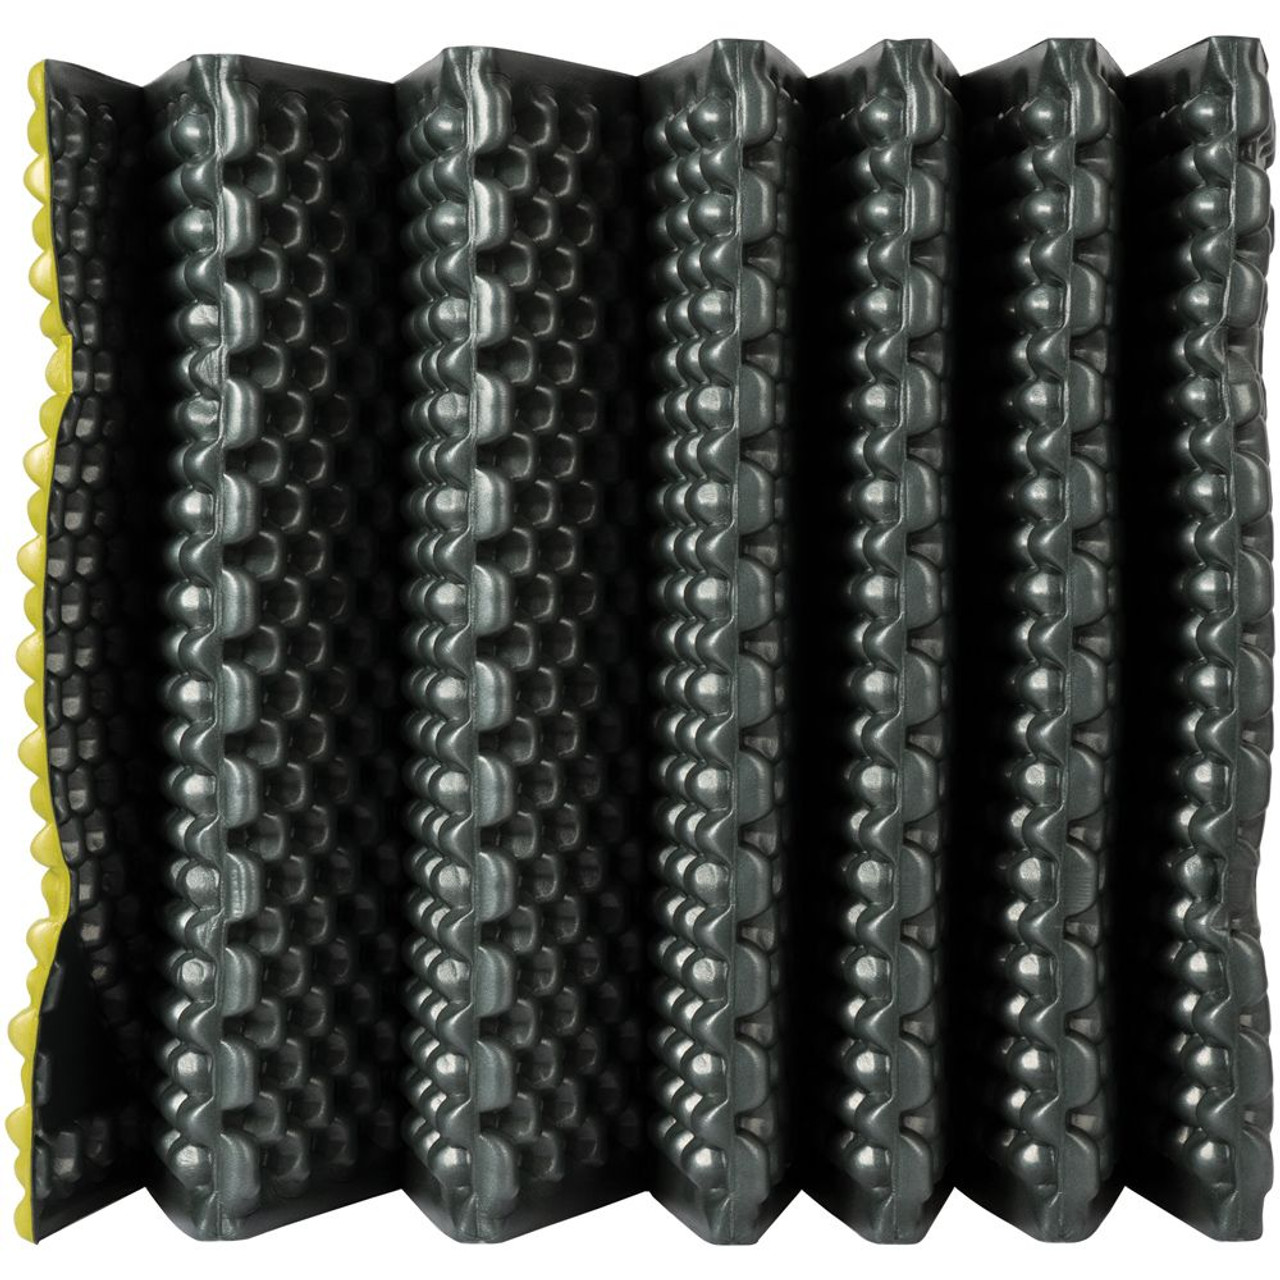 Peregrine 580330 Grid-Link Folding Foam Pad